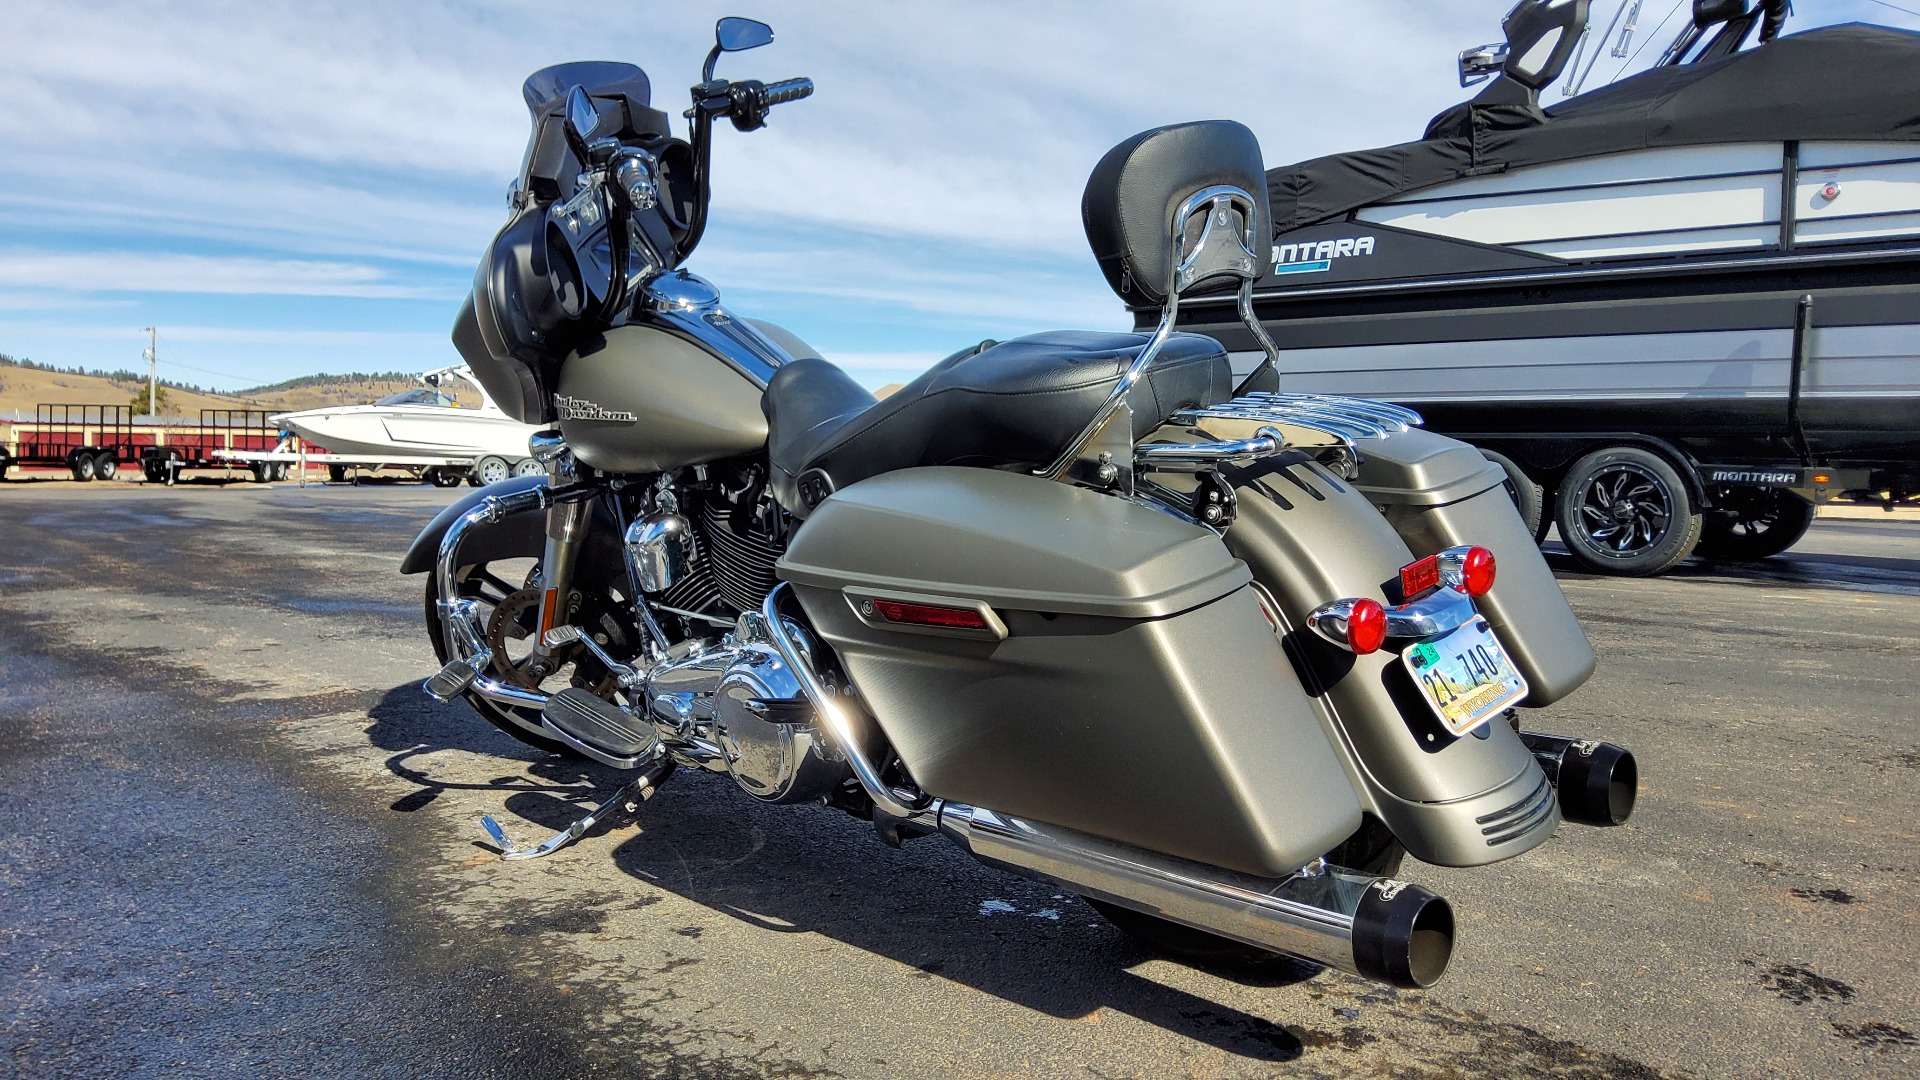 2018 Harley-Davidson Street Glide® in Spearfish, South Dakota - Photo 4